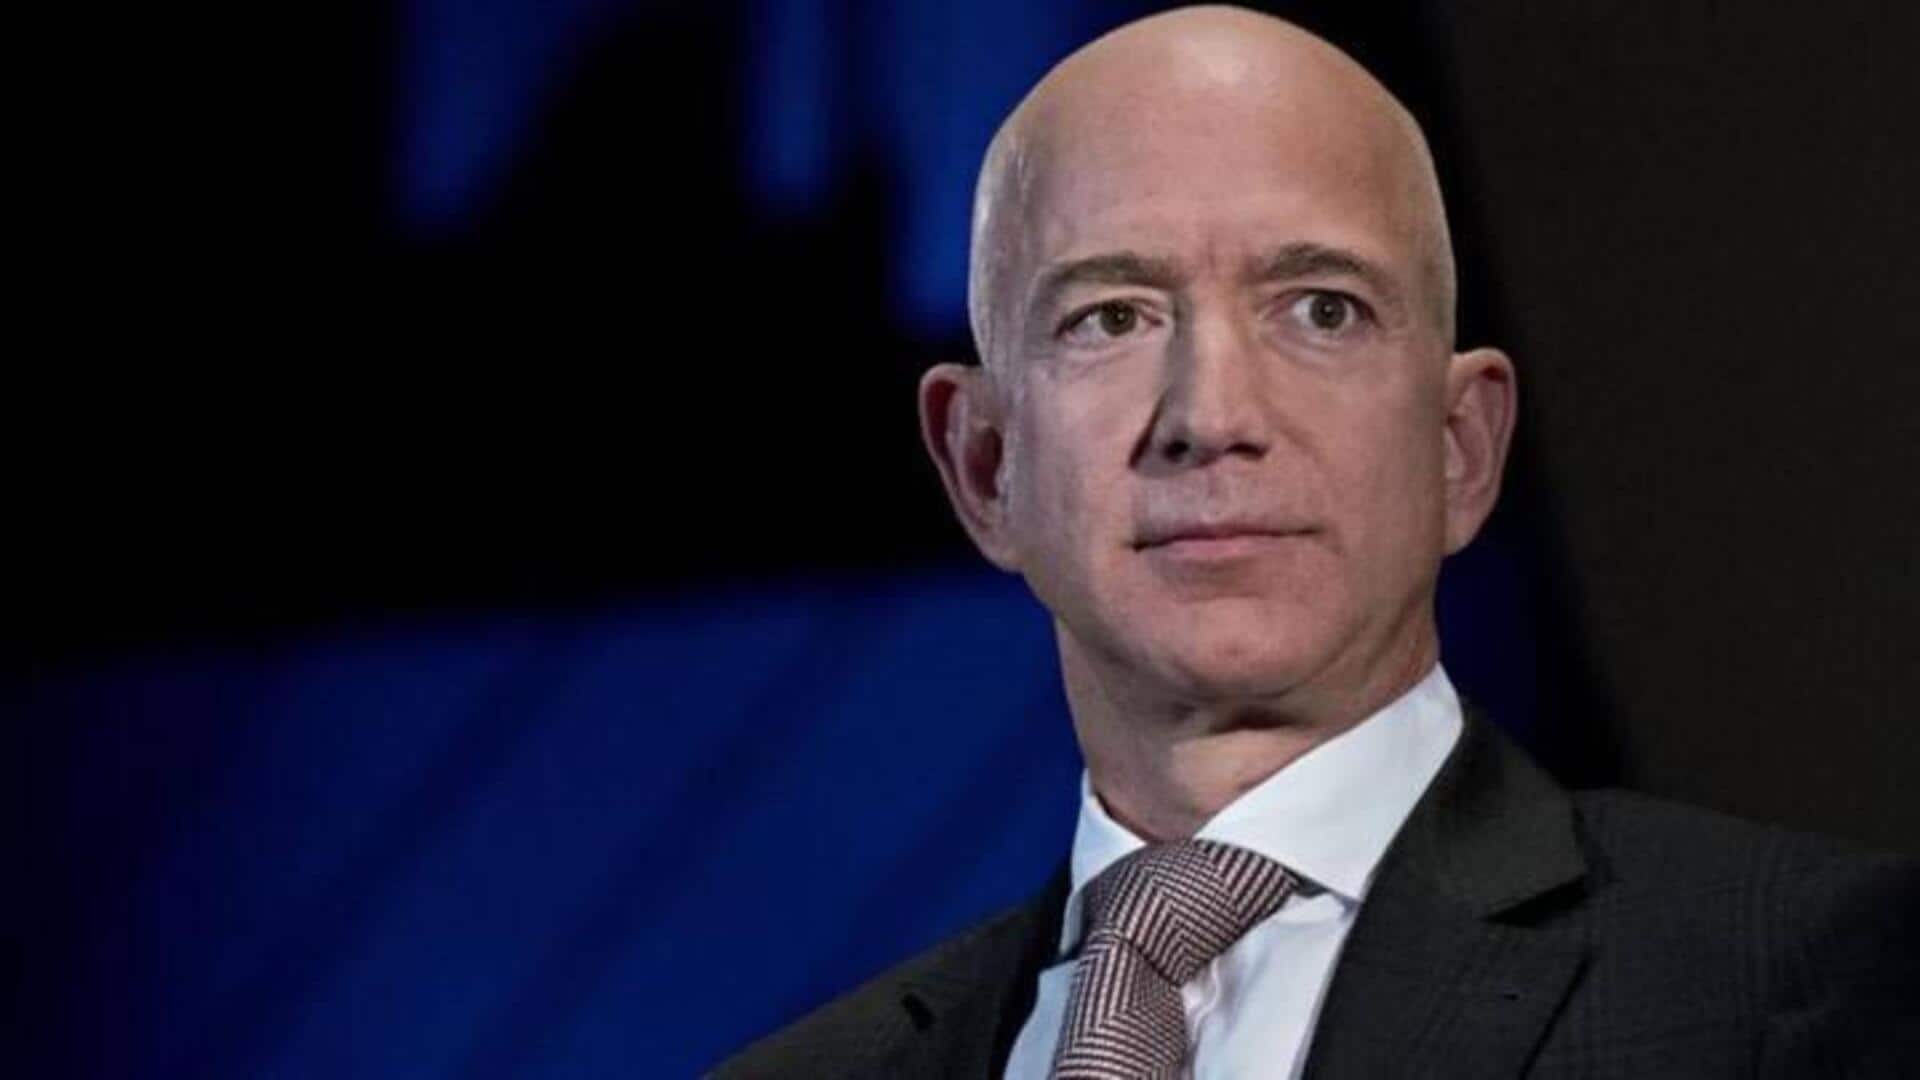 Jeff Bezos concludes 50M Amazon stock sale, nets $8.5B 